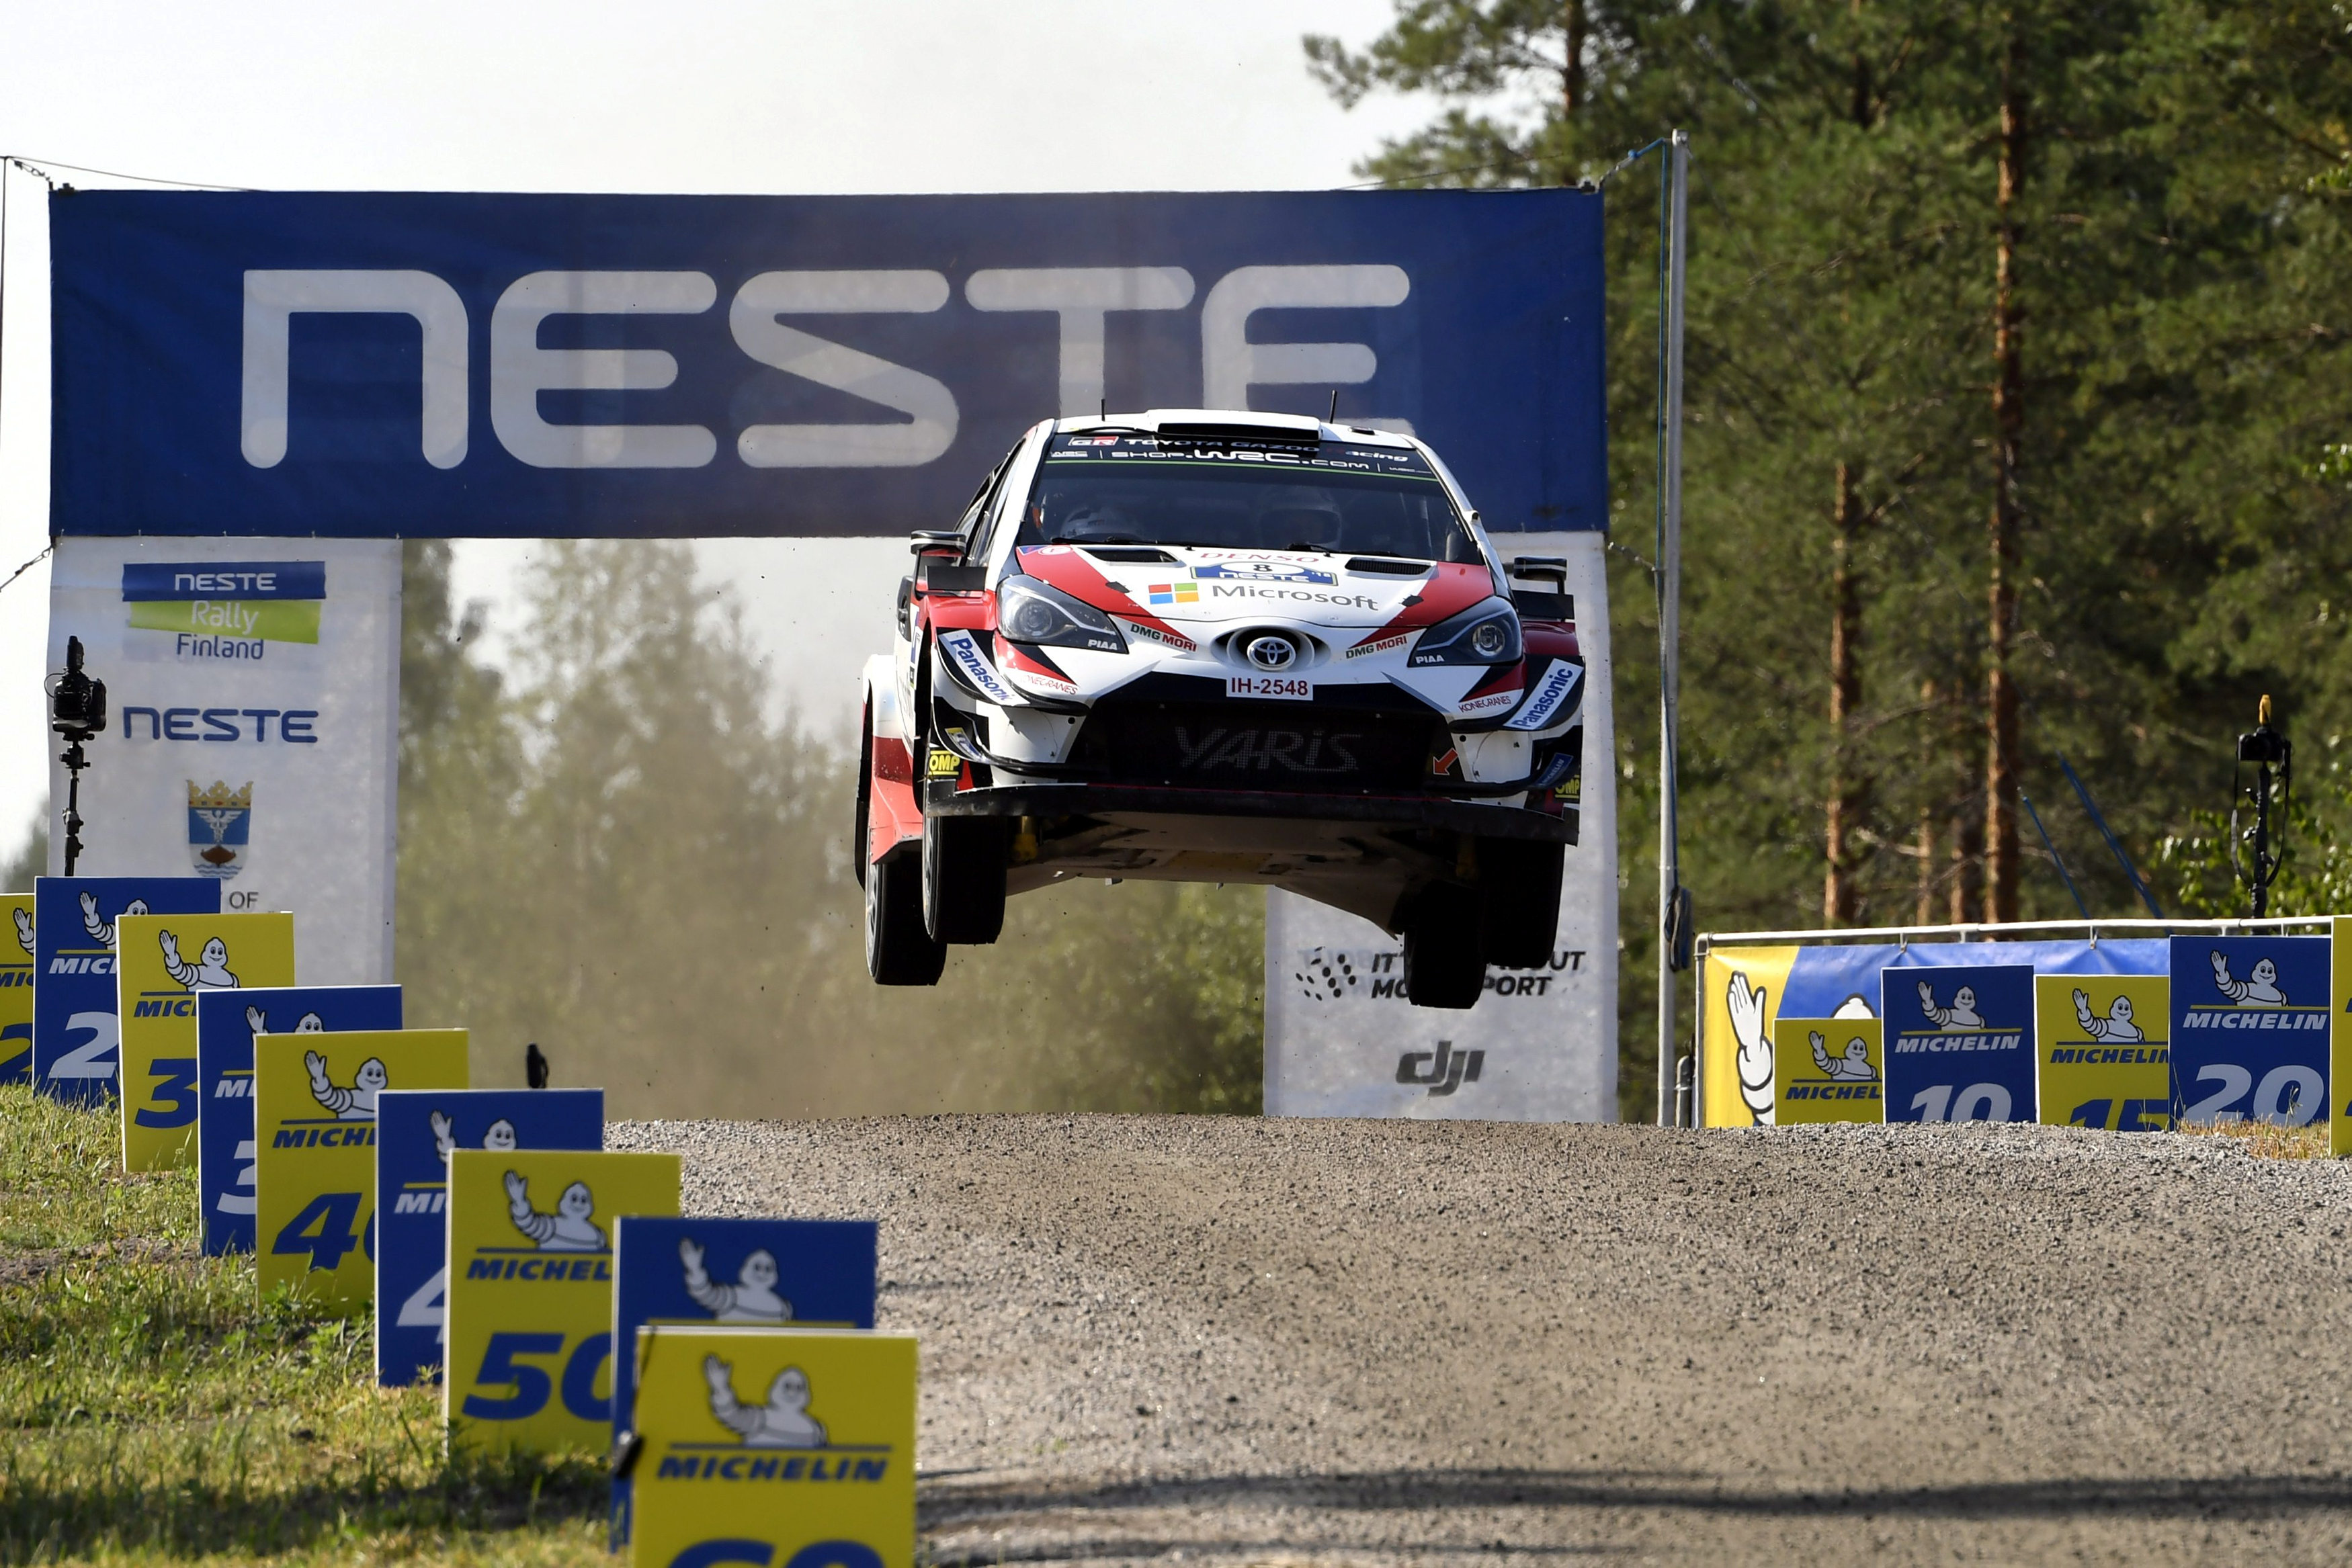 Motorsport: Tanak wins in Finland, Neuville stays top overall